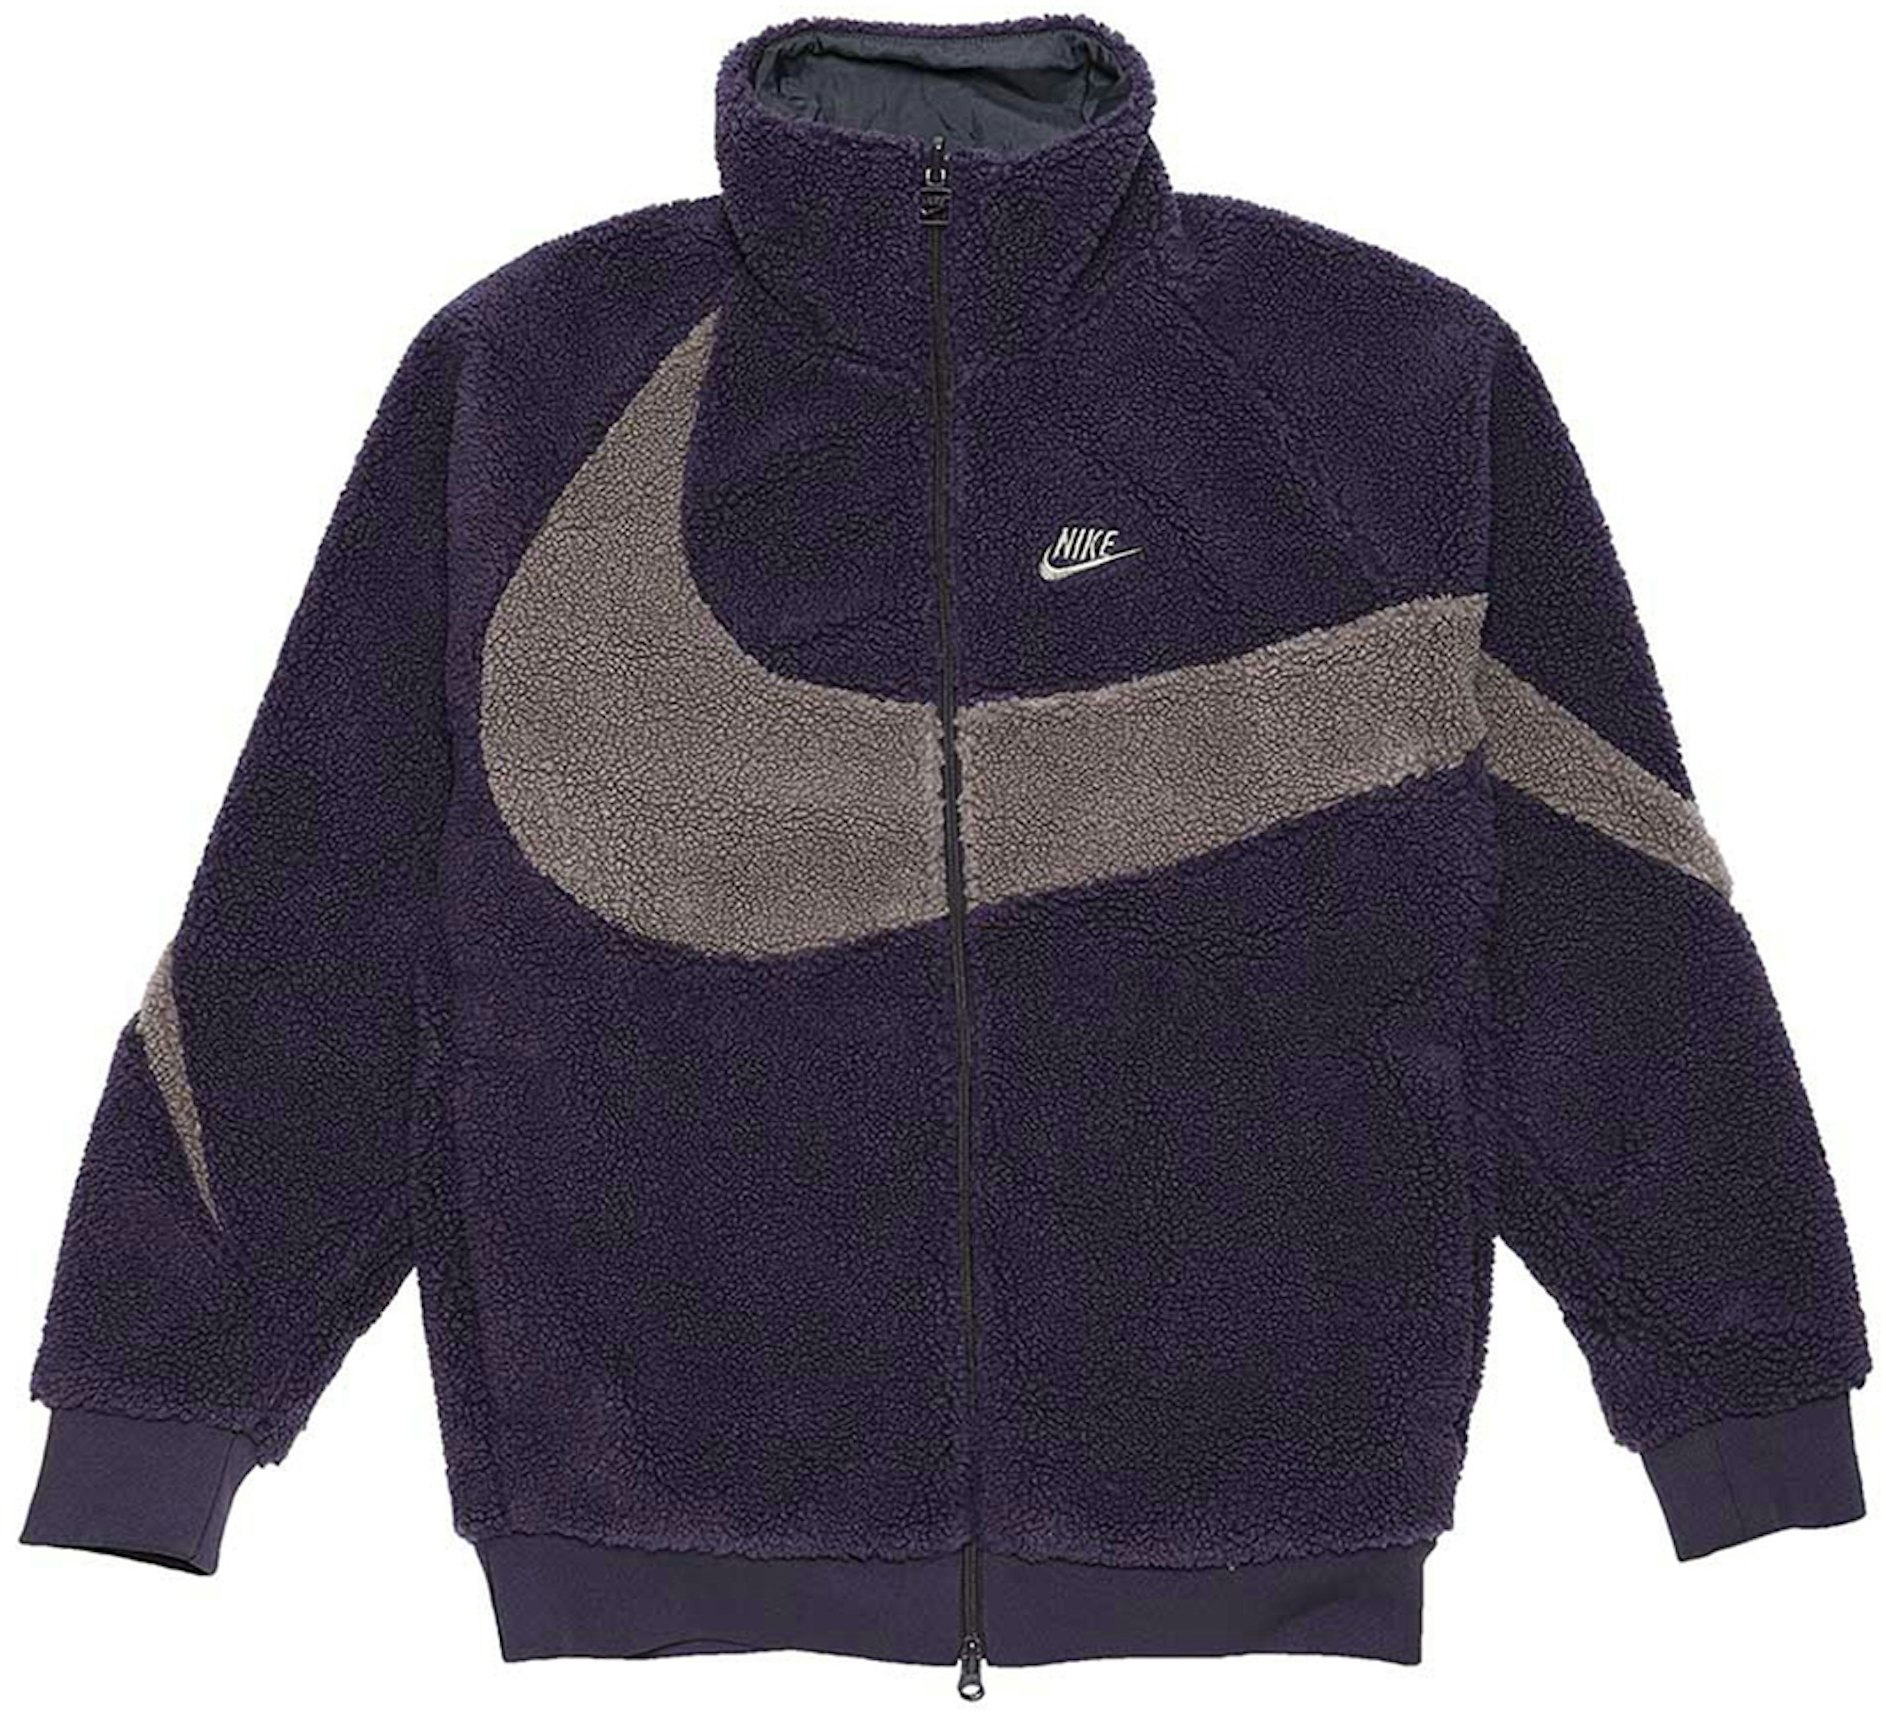 Nike Big Swoosh Reversible Boa Jacket Sizing) Cave Purple - SS22 Men's US